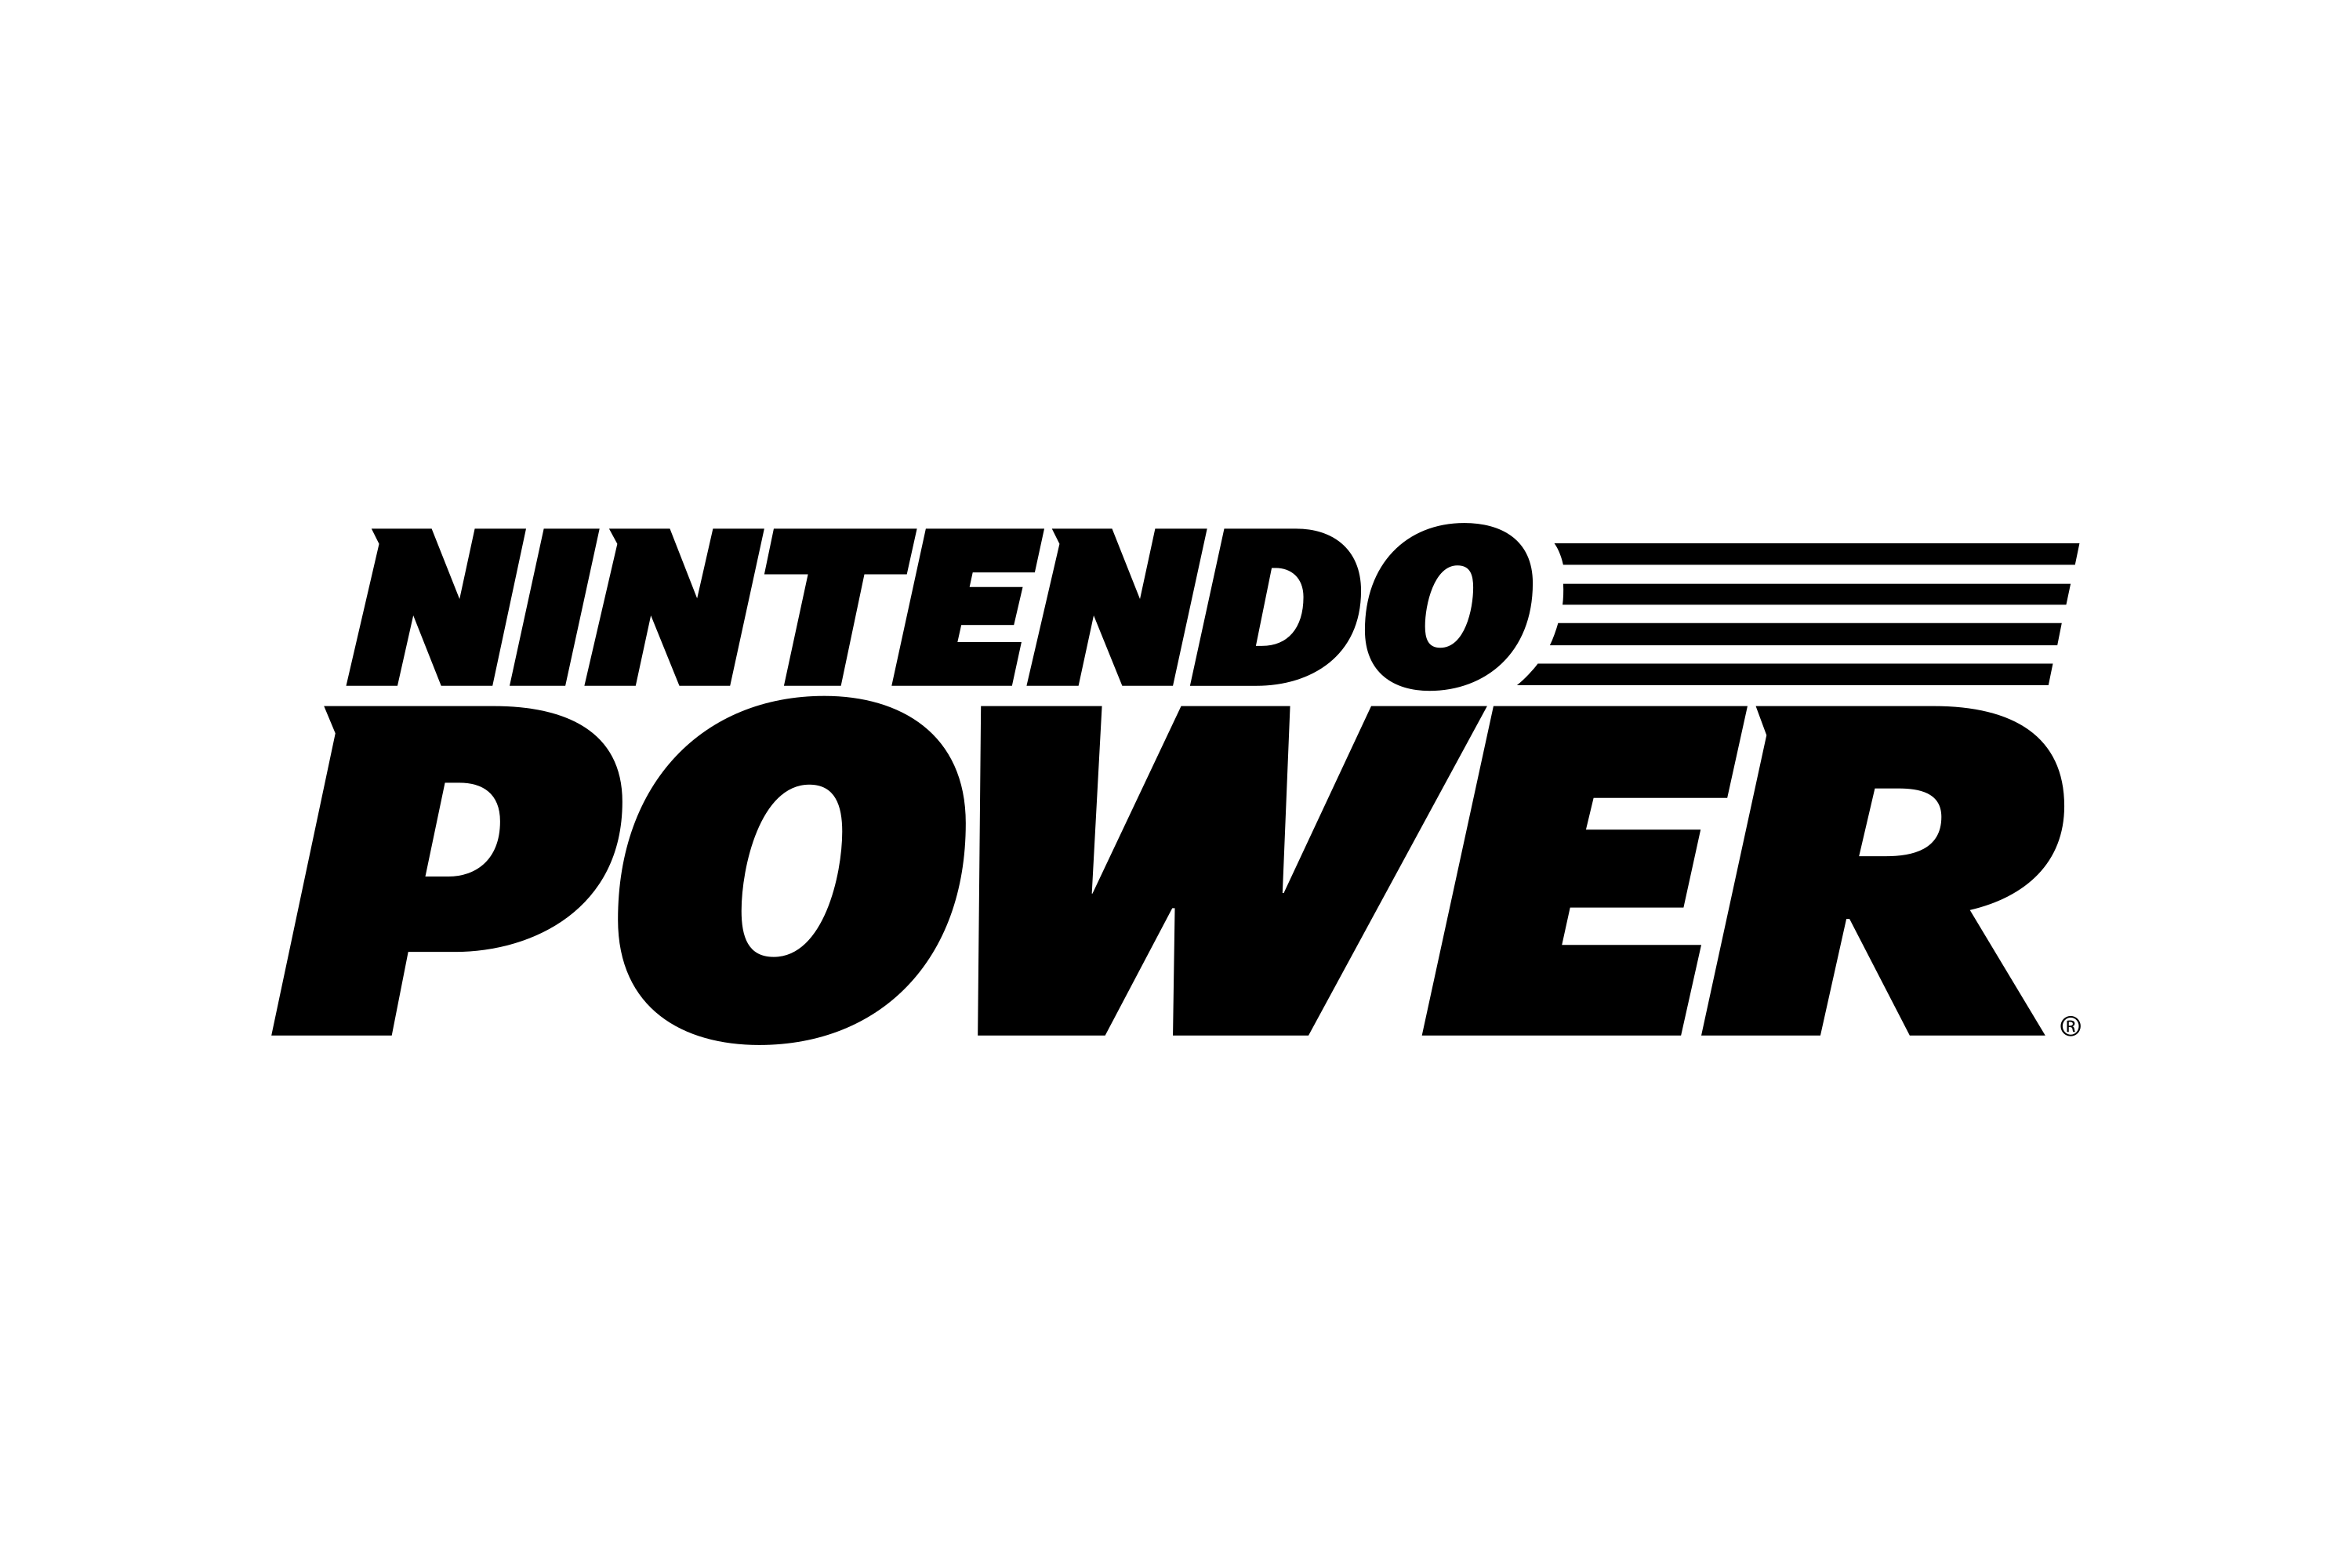 Nintendo power. Power logo. Nintendo Power logo. Power картинки. Нинтендо вектор.